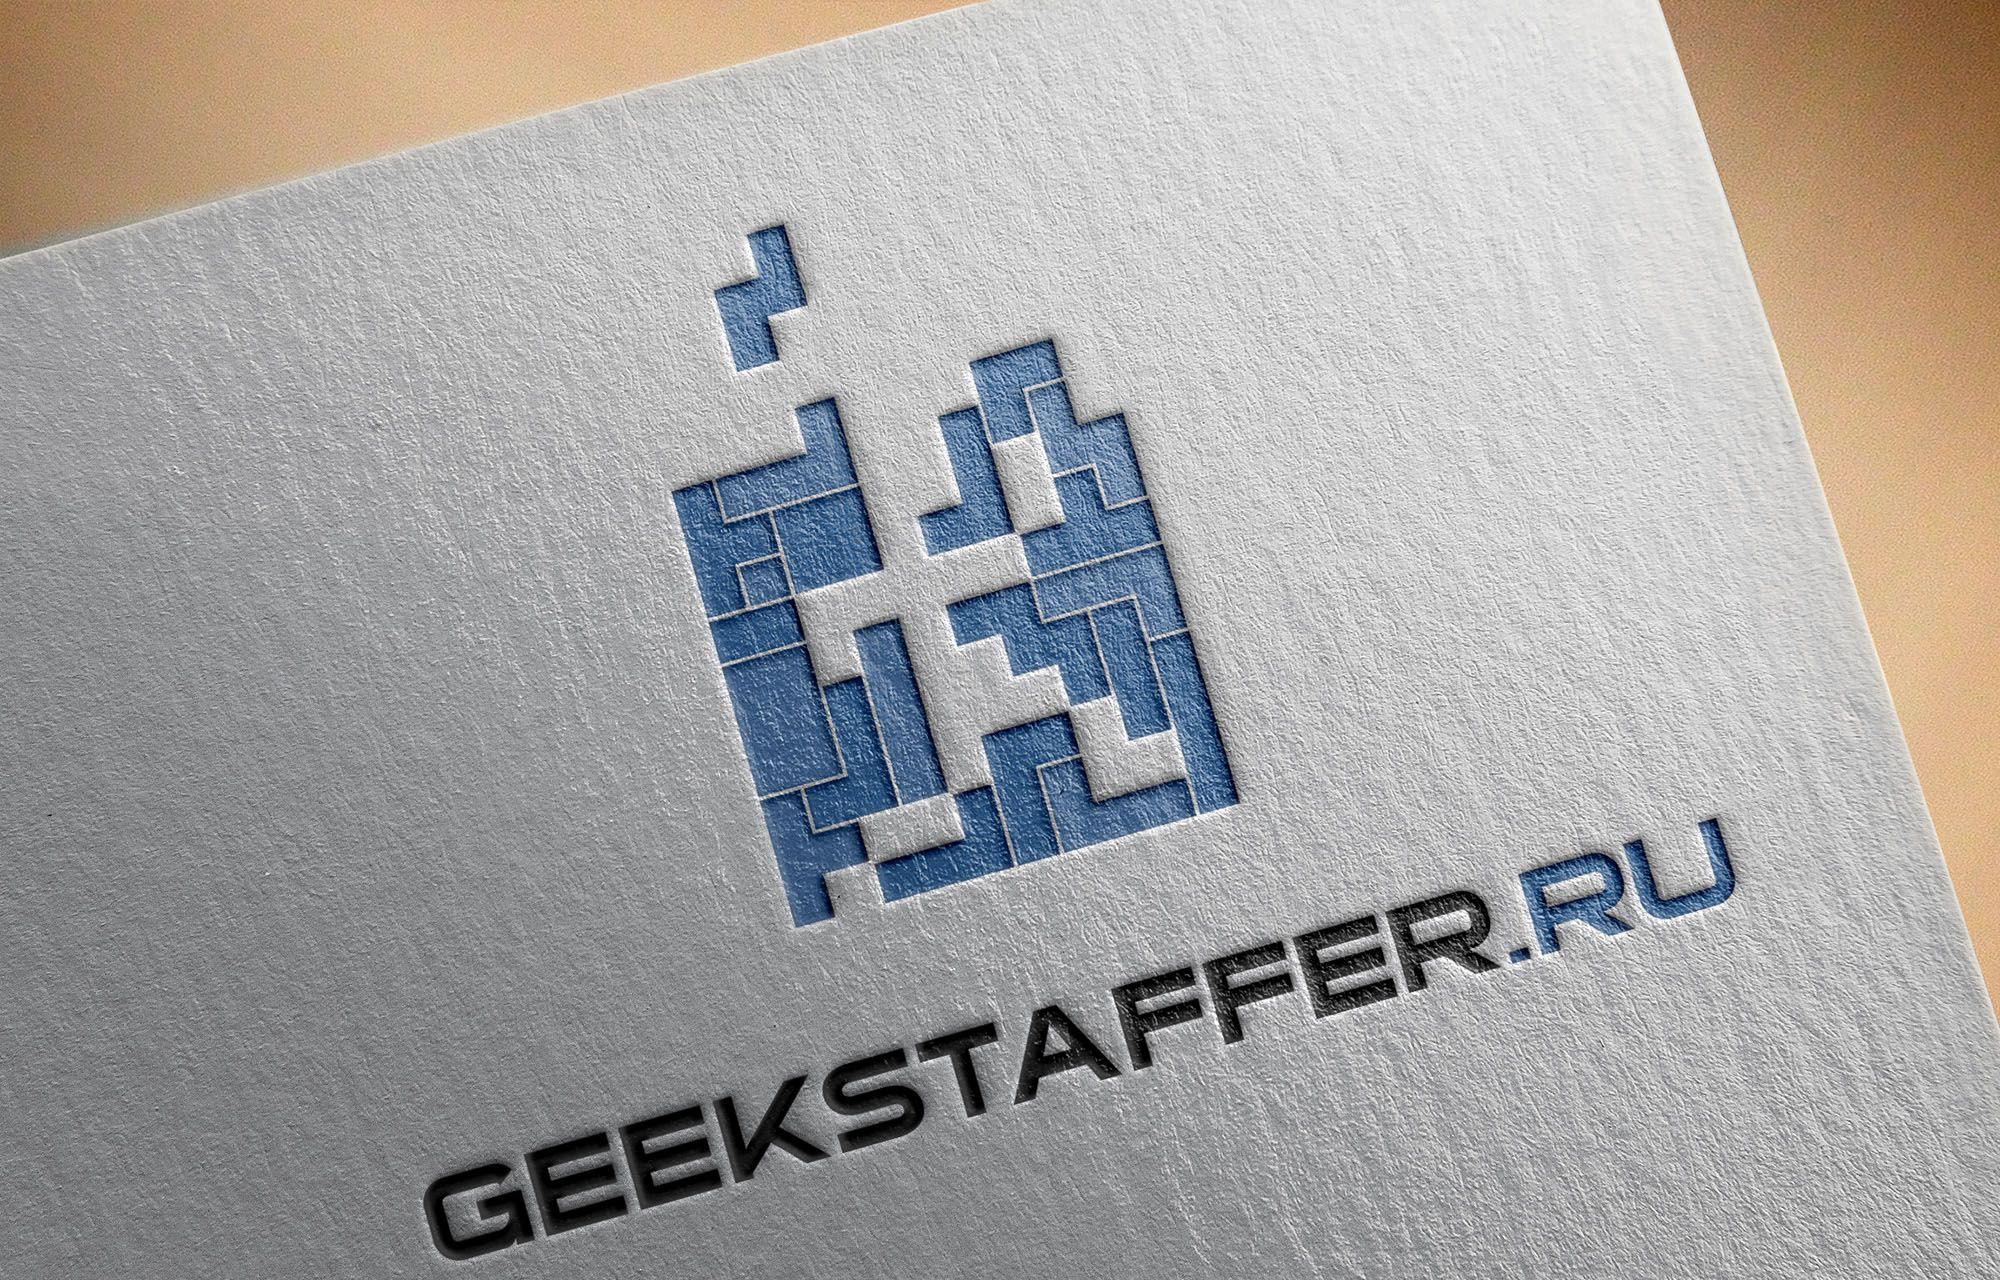 Логотип для GeekStaffer - дизайнер katarin